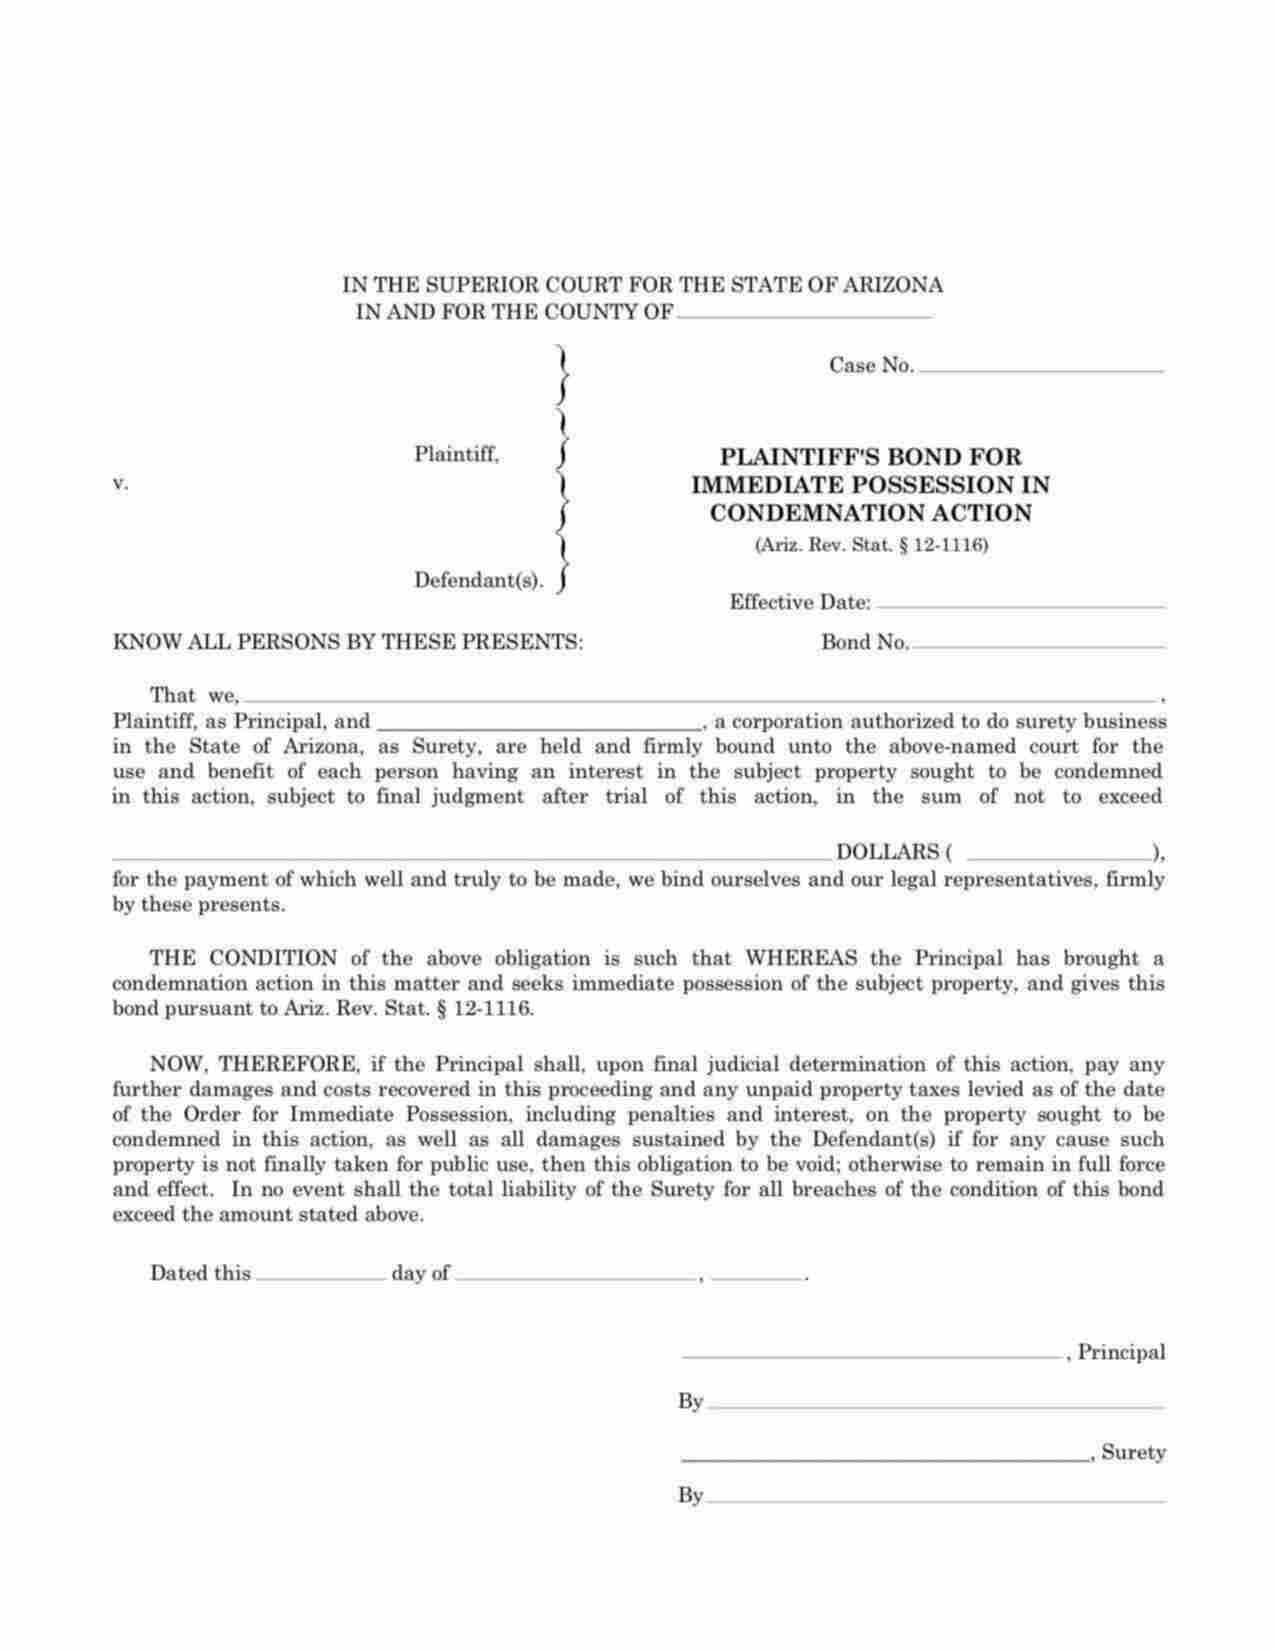 Arizona Plaintiffs Immediate Possession in Condemnation Action Bond Form